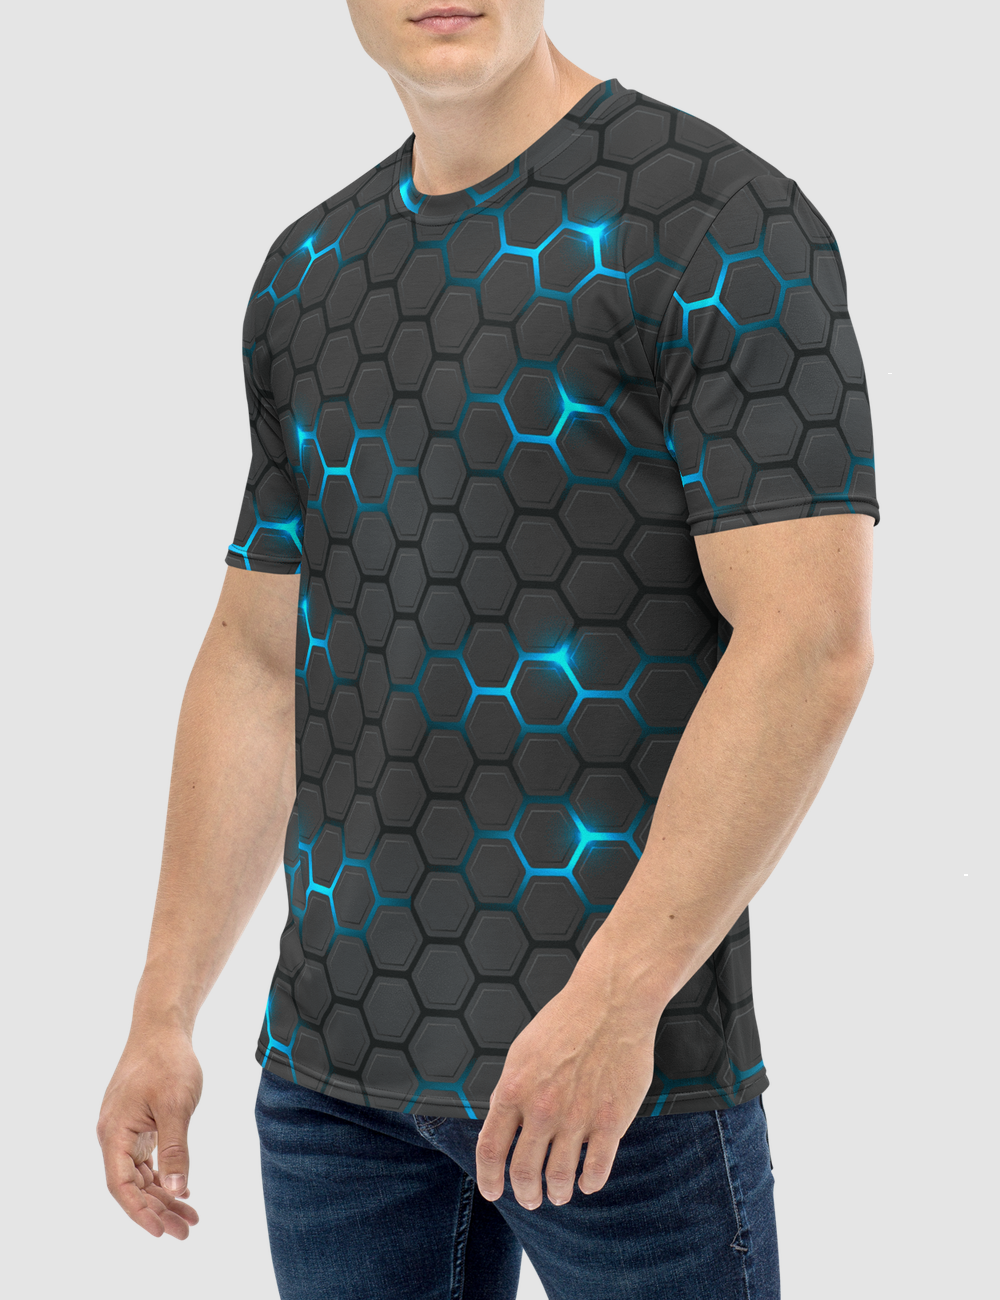 Neo Digital Faux Carbon Fiber Men's Sublimated T-Shirt OniTakai